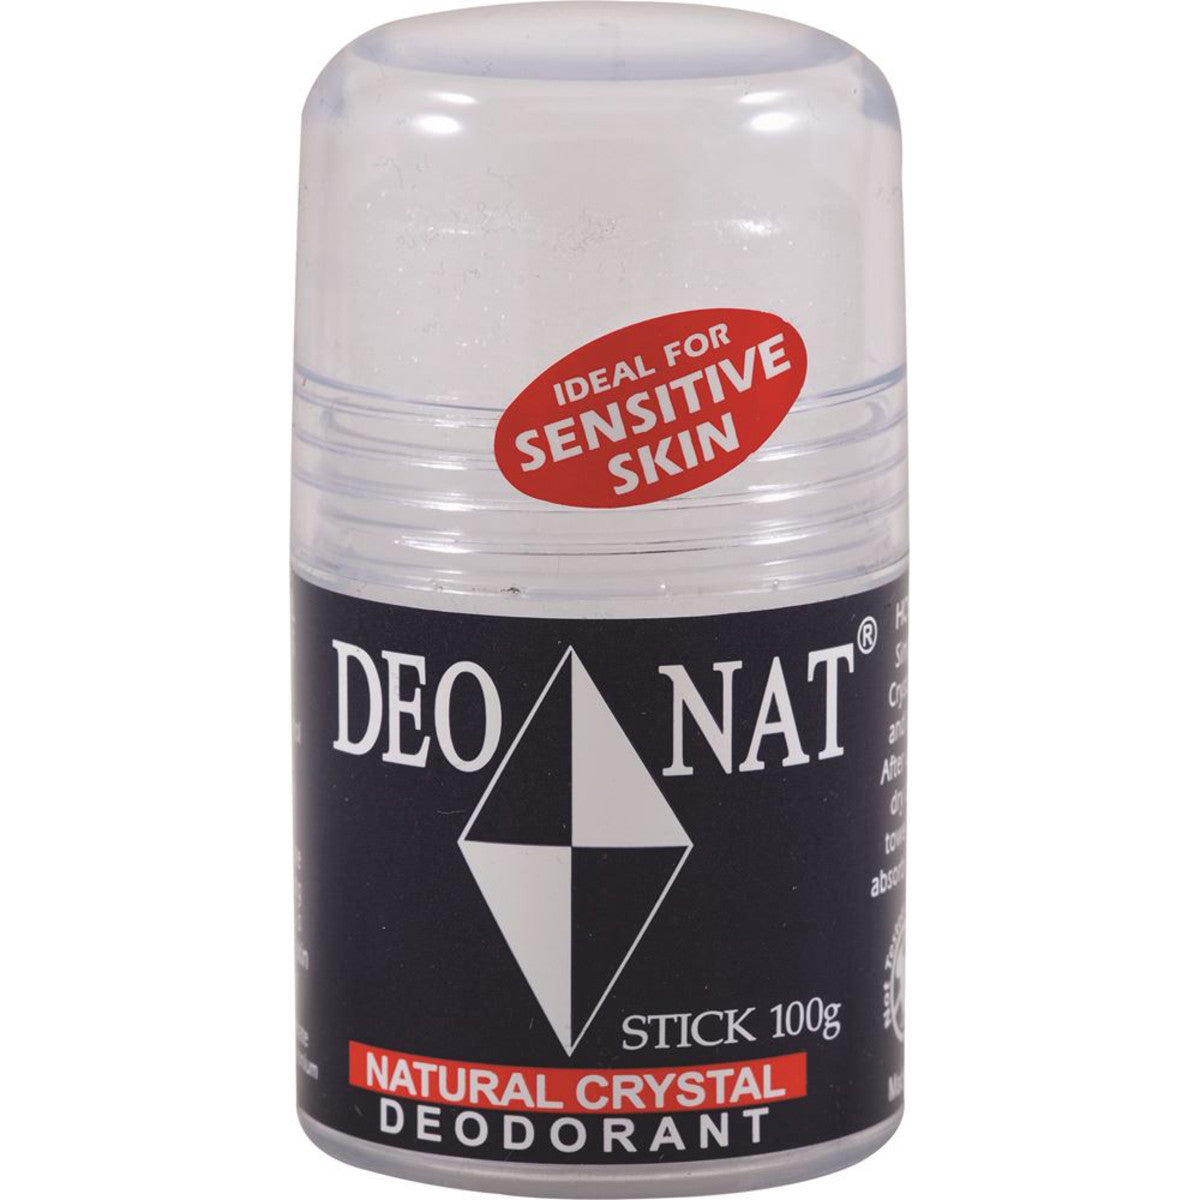 Deonat - Crystal Deodorant Stick